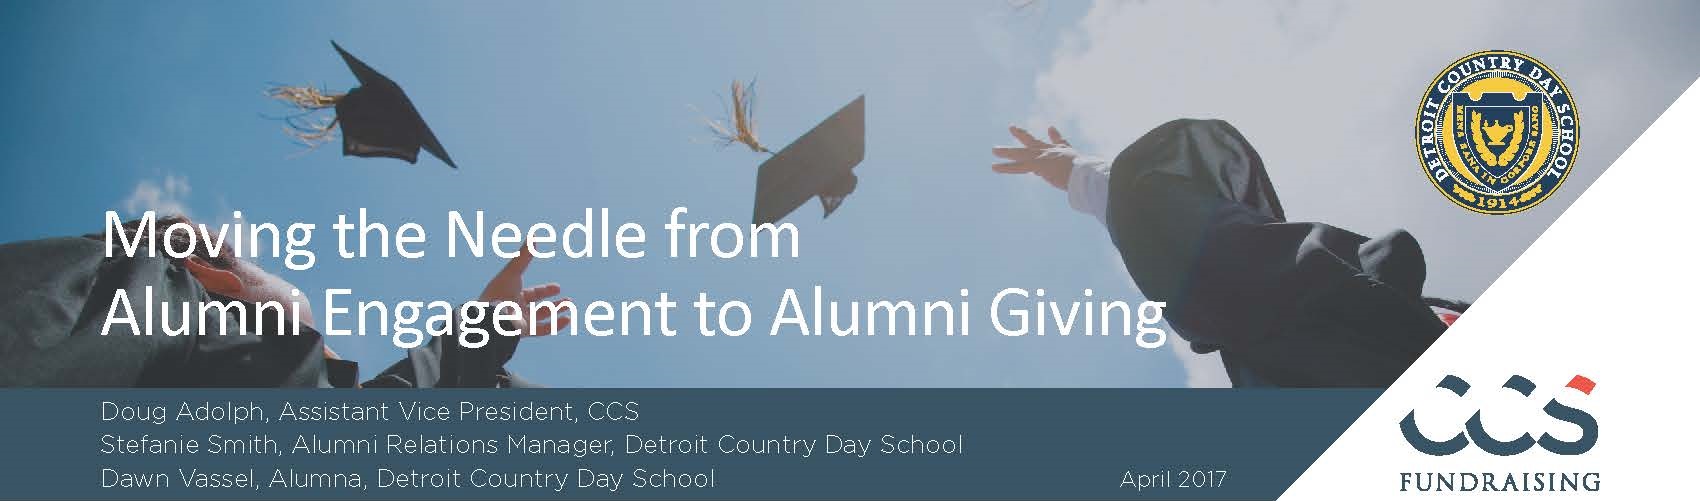 CCS White Paper - Alumni Engagement to Alumni Giving image.jpg